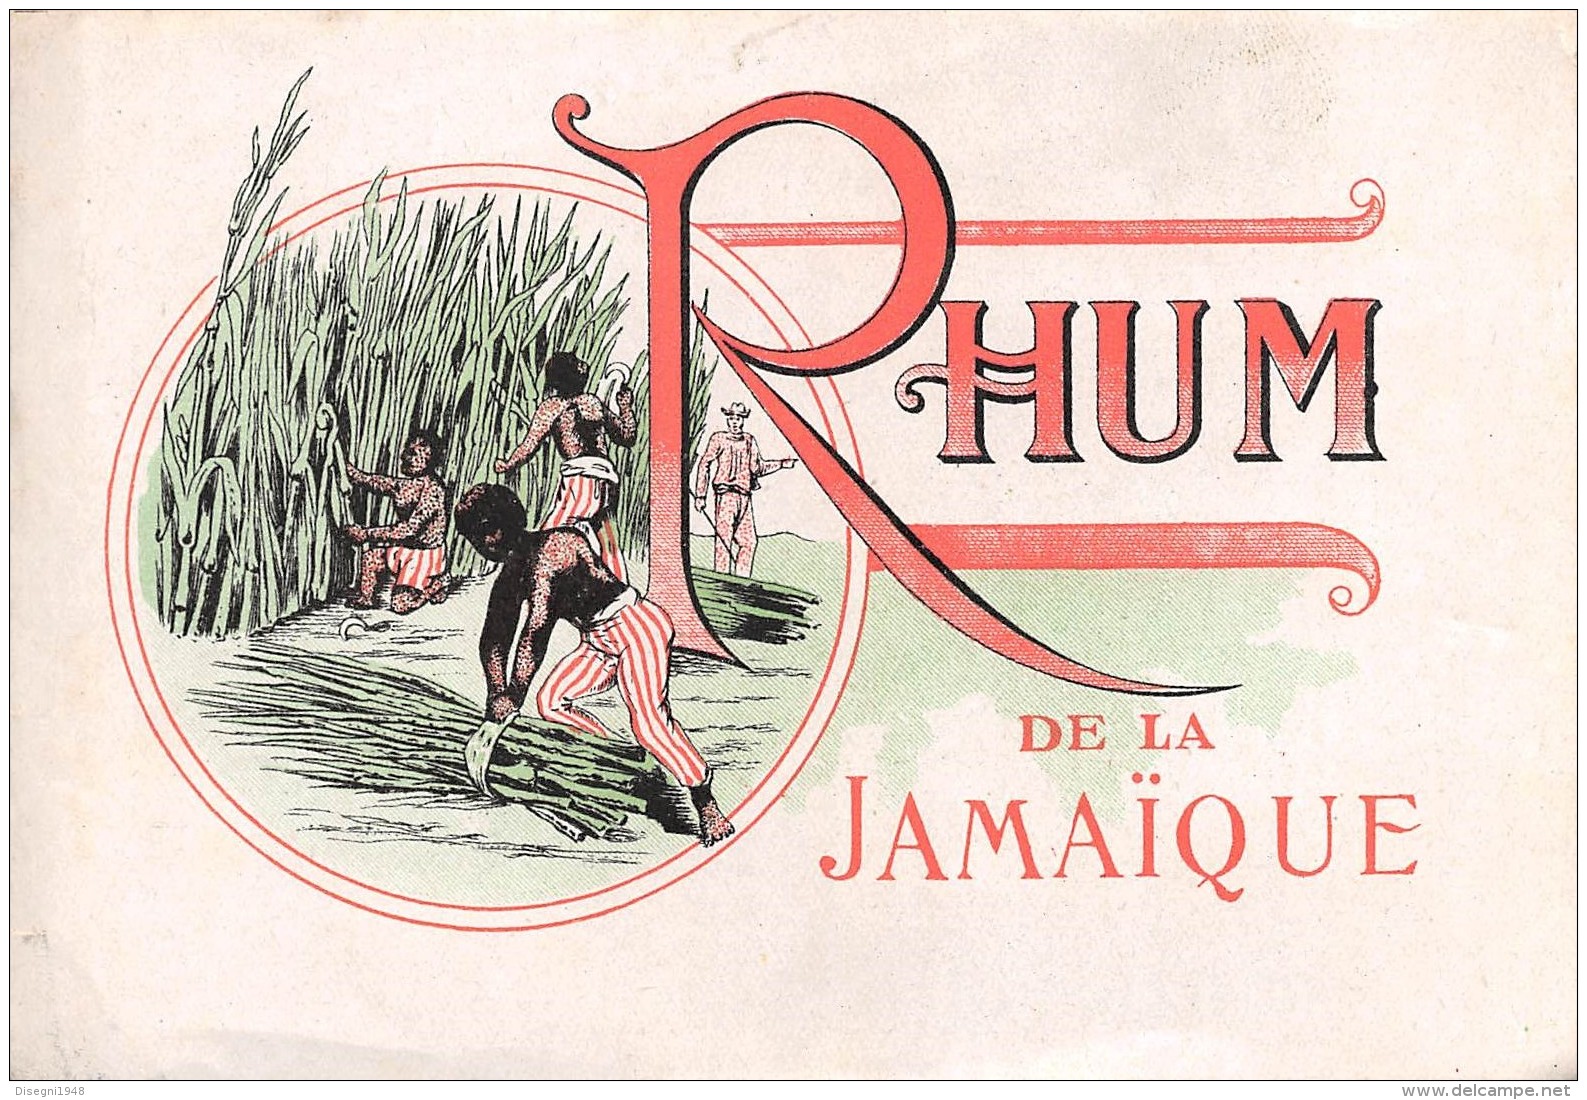 06283 "RHUM DE LA JAMAIQUE" ETICH. ORIG. - ORIG. LABEL - Rum